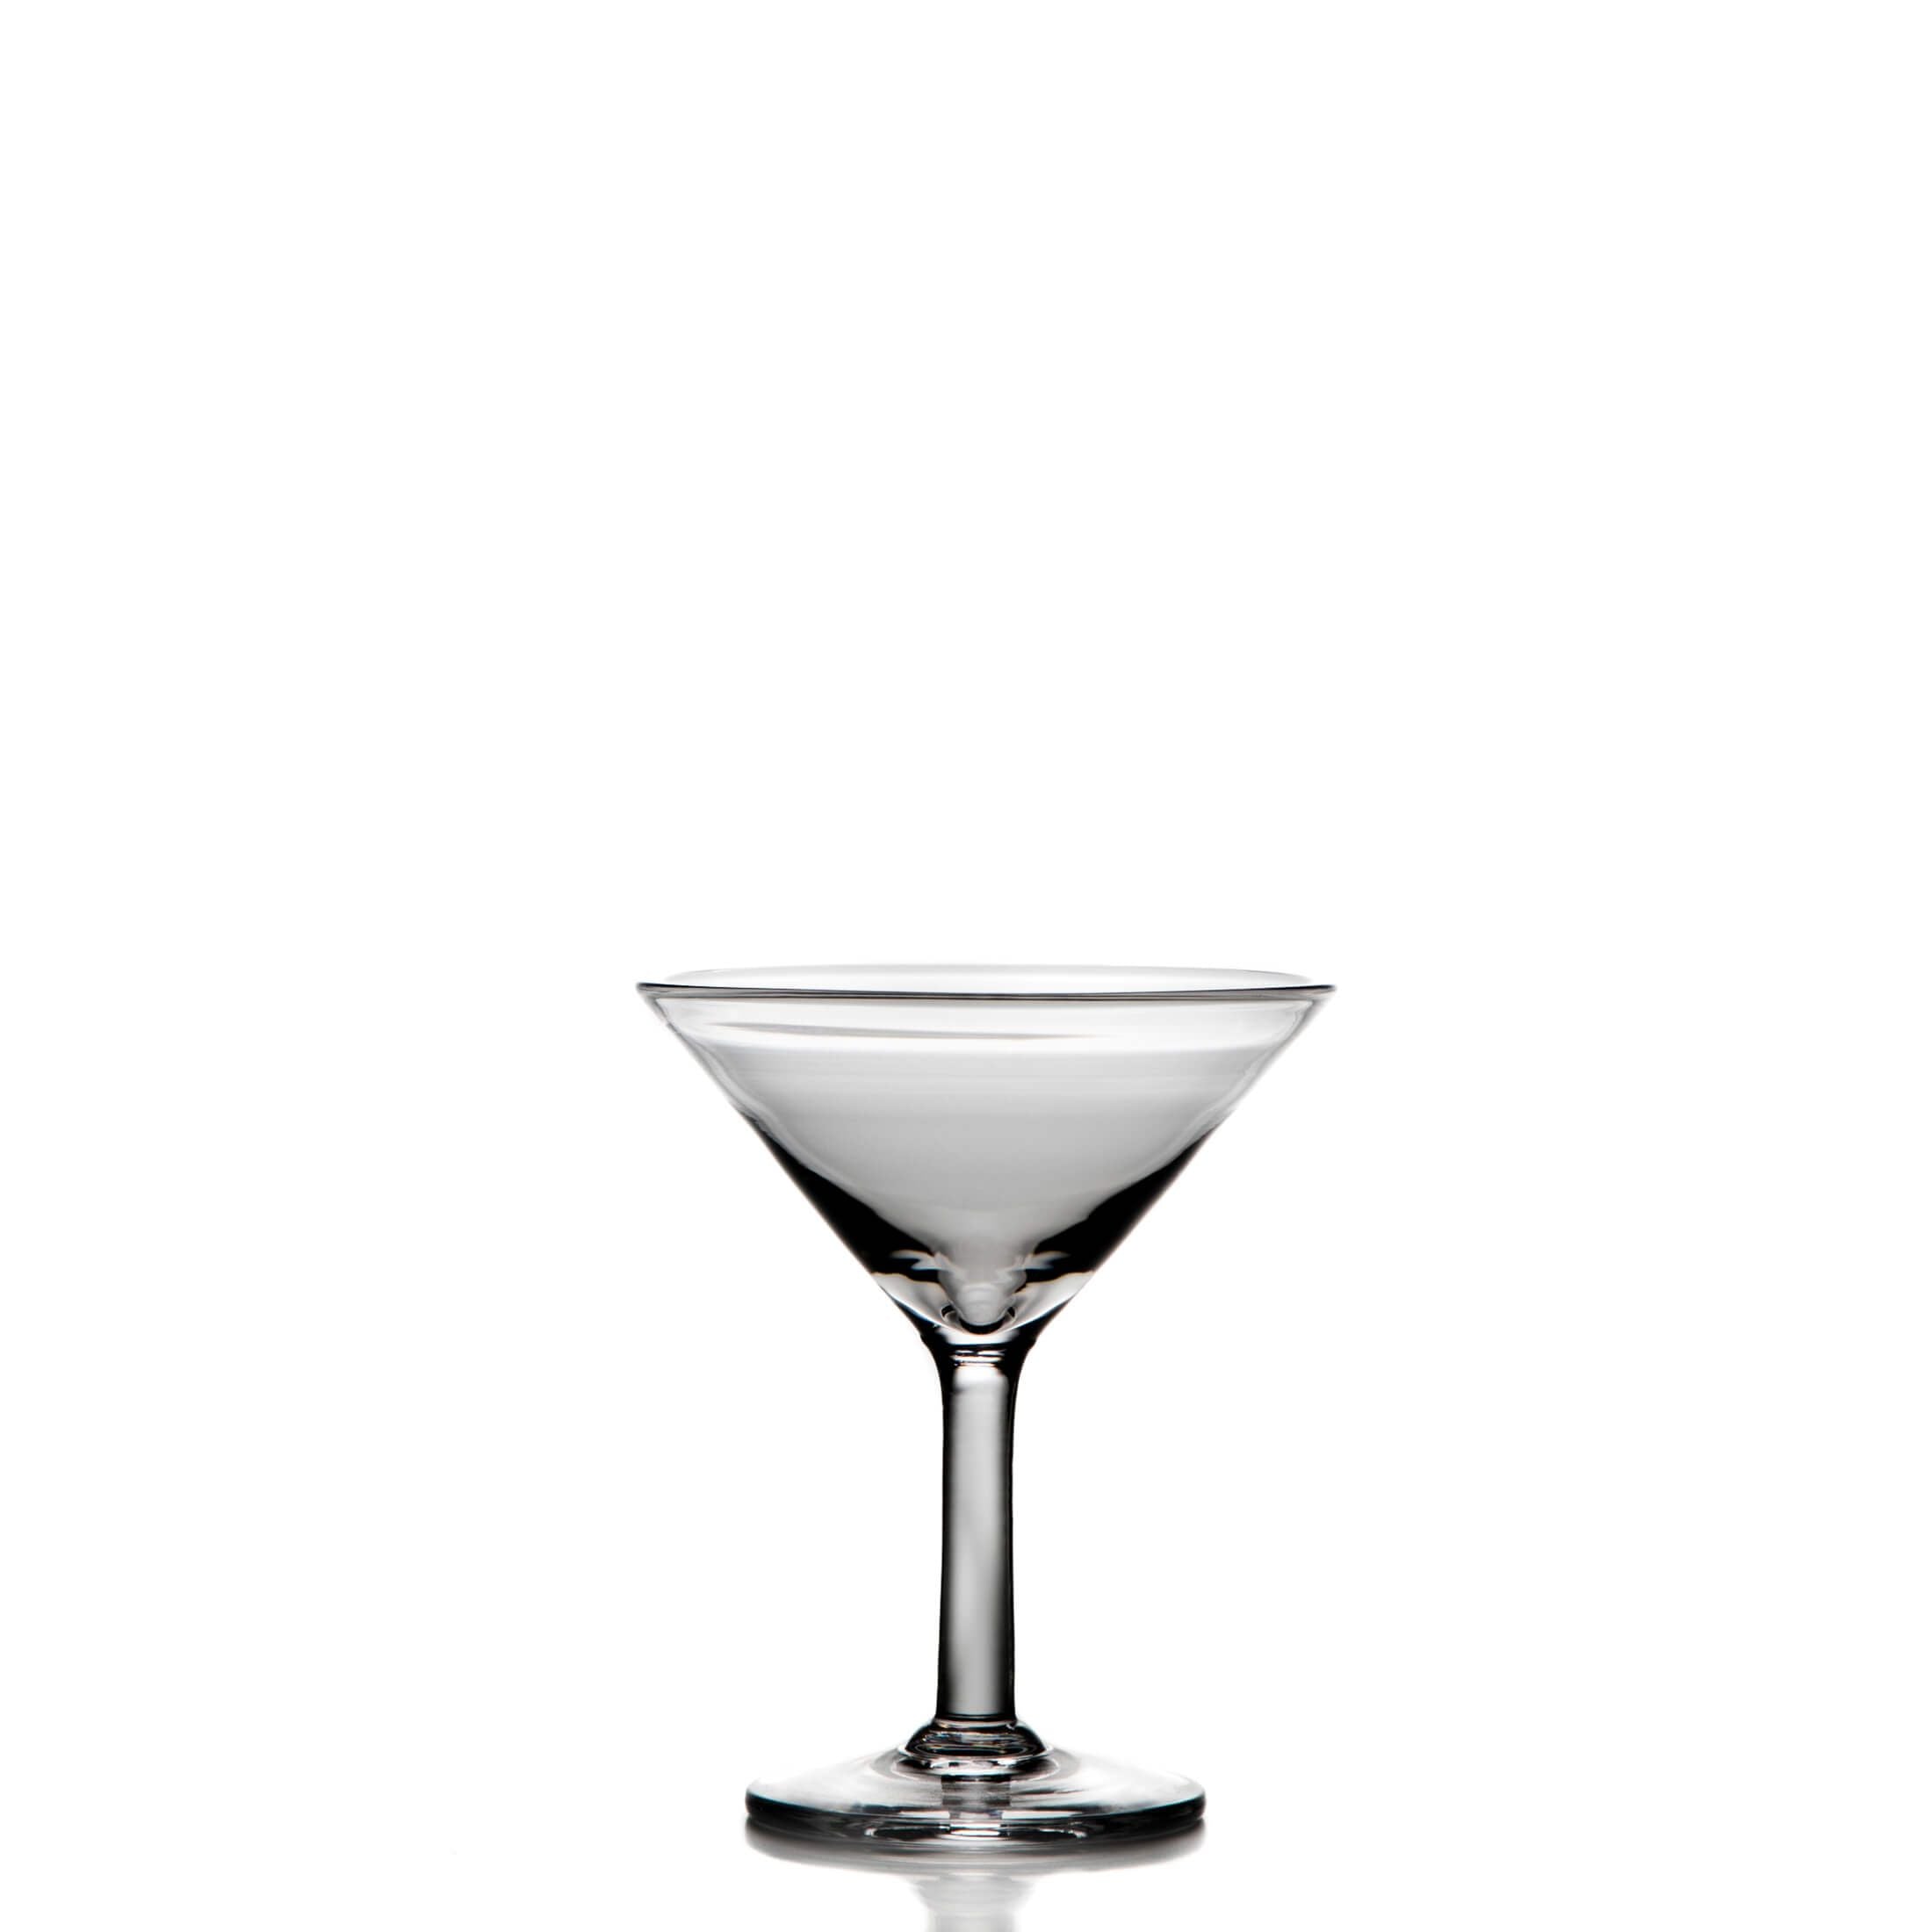 Ascutney Martini